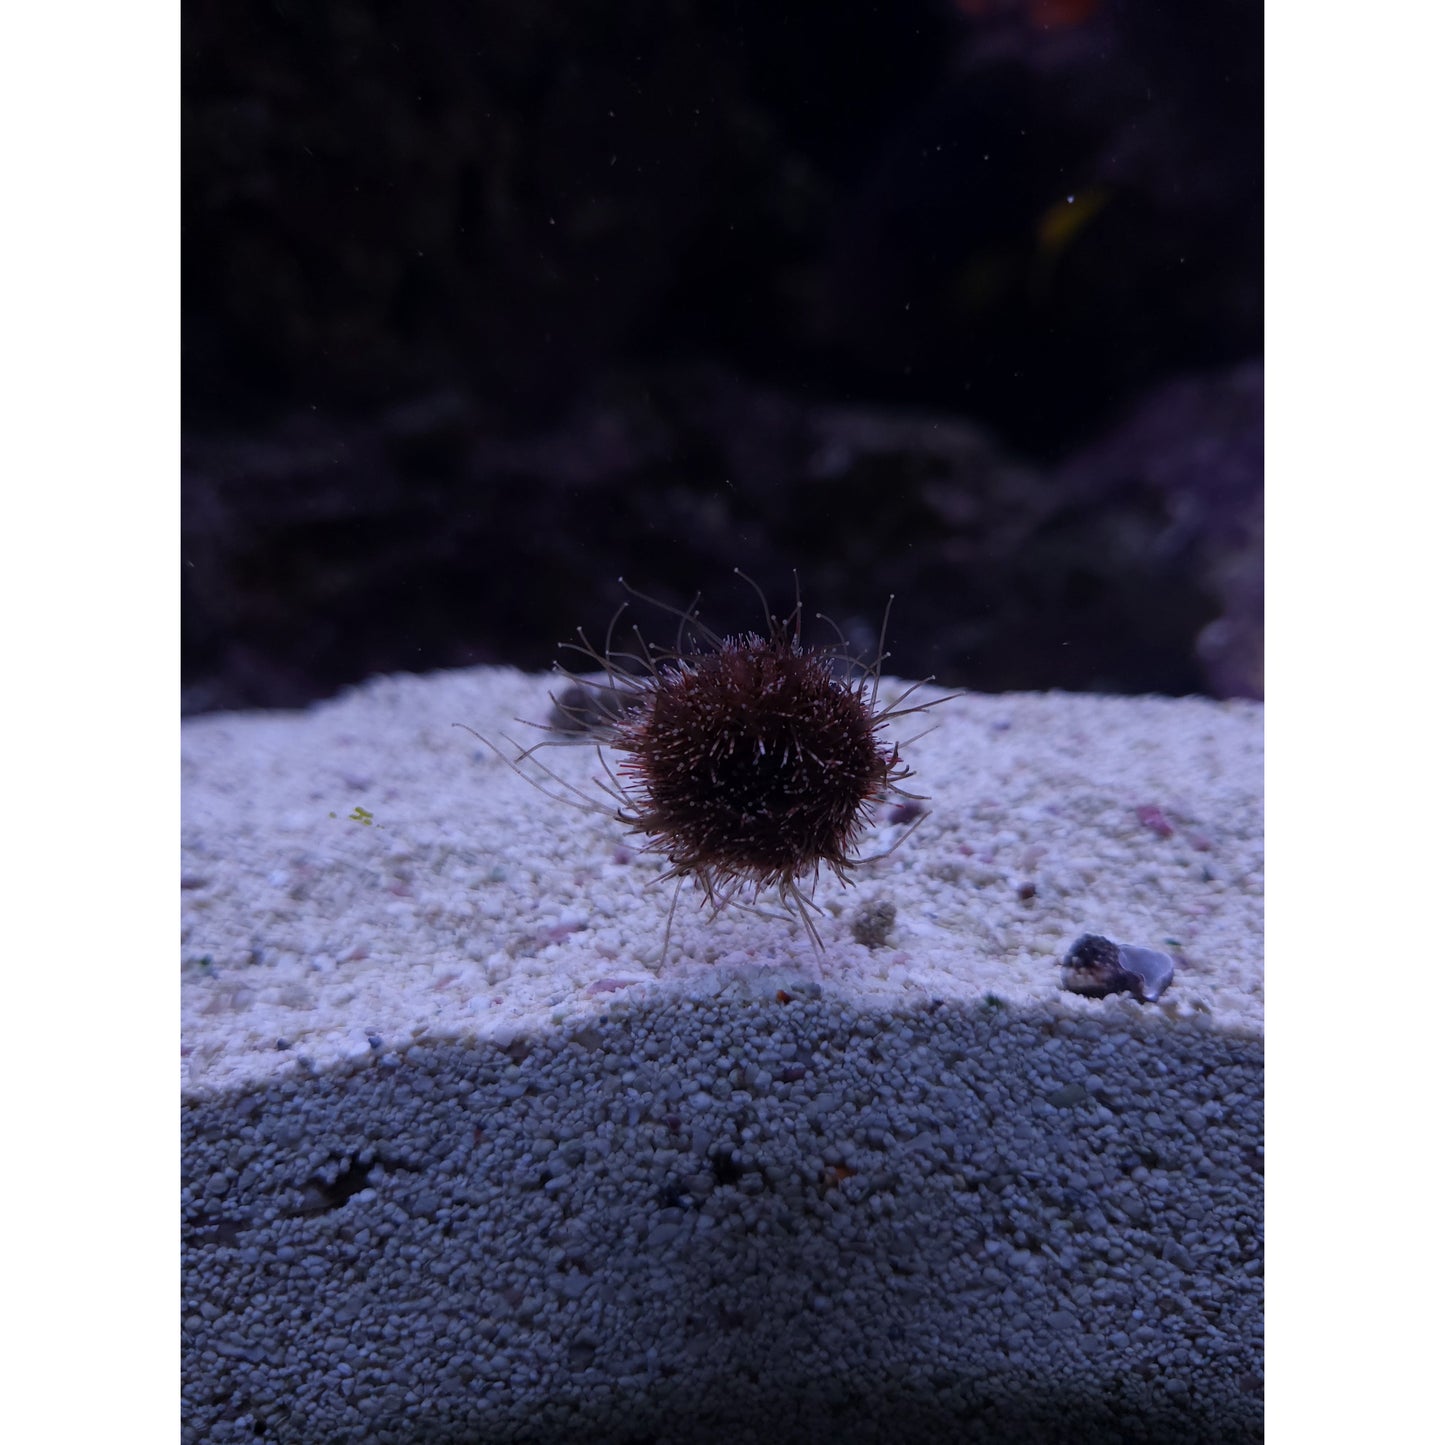 Aquacultured Tuxedo Urchin